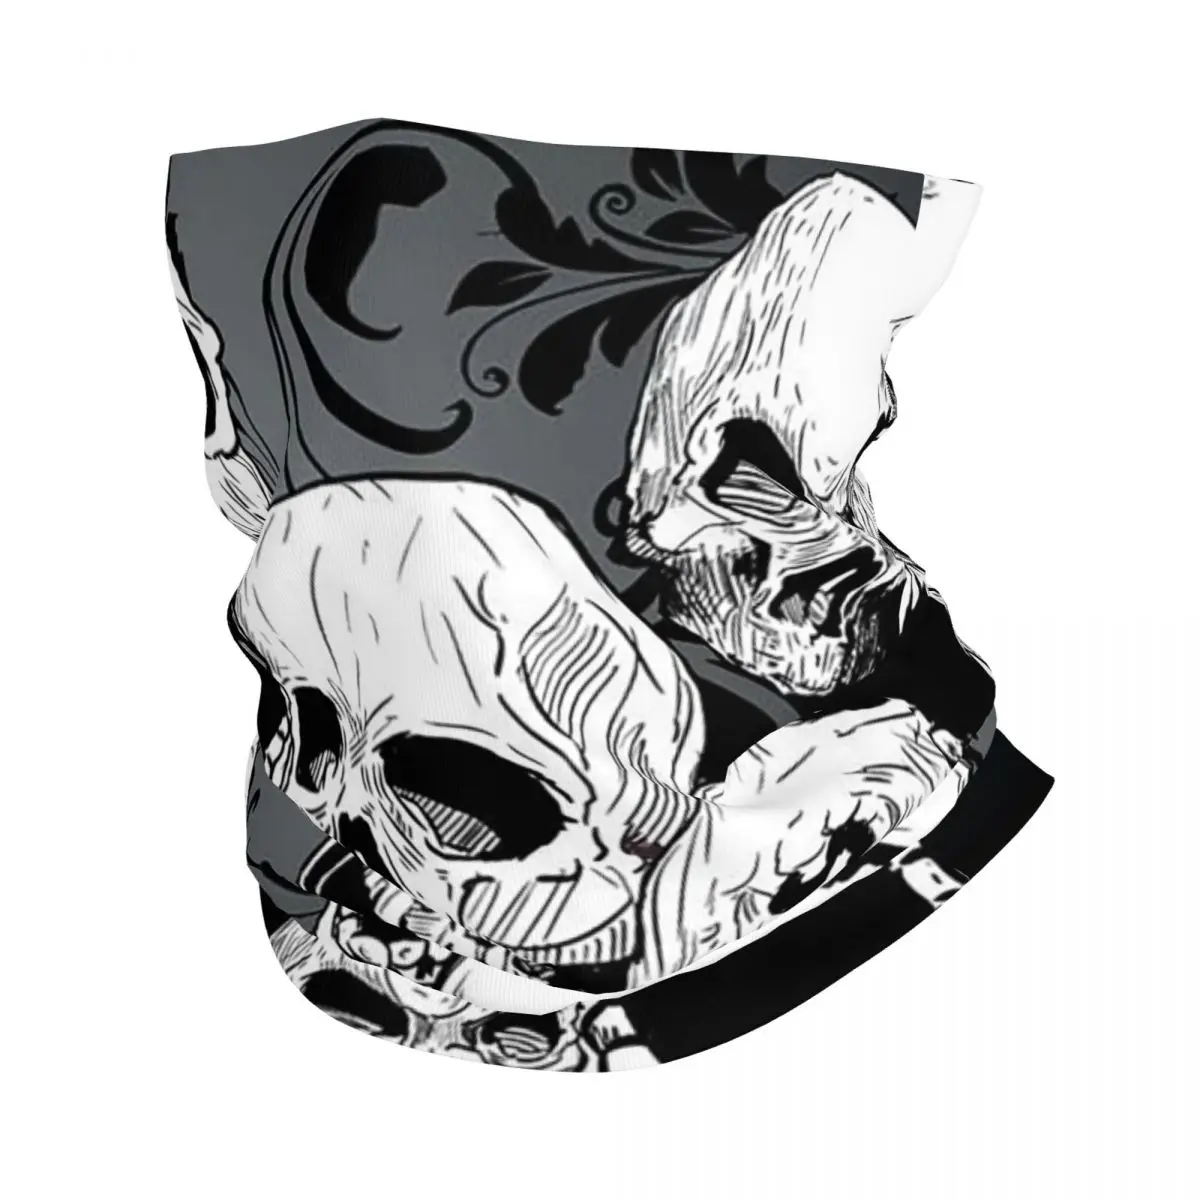 

Death Skull Gothic Bandana Neck Gaiter Printed Bones skeleton horror Mask Scarf Balaclava Riding for Men Women Adult Windproof